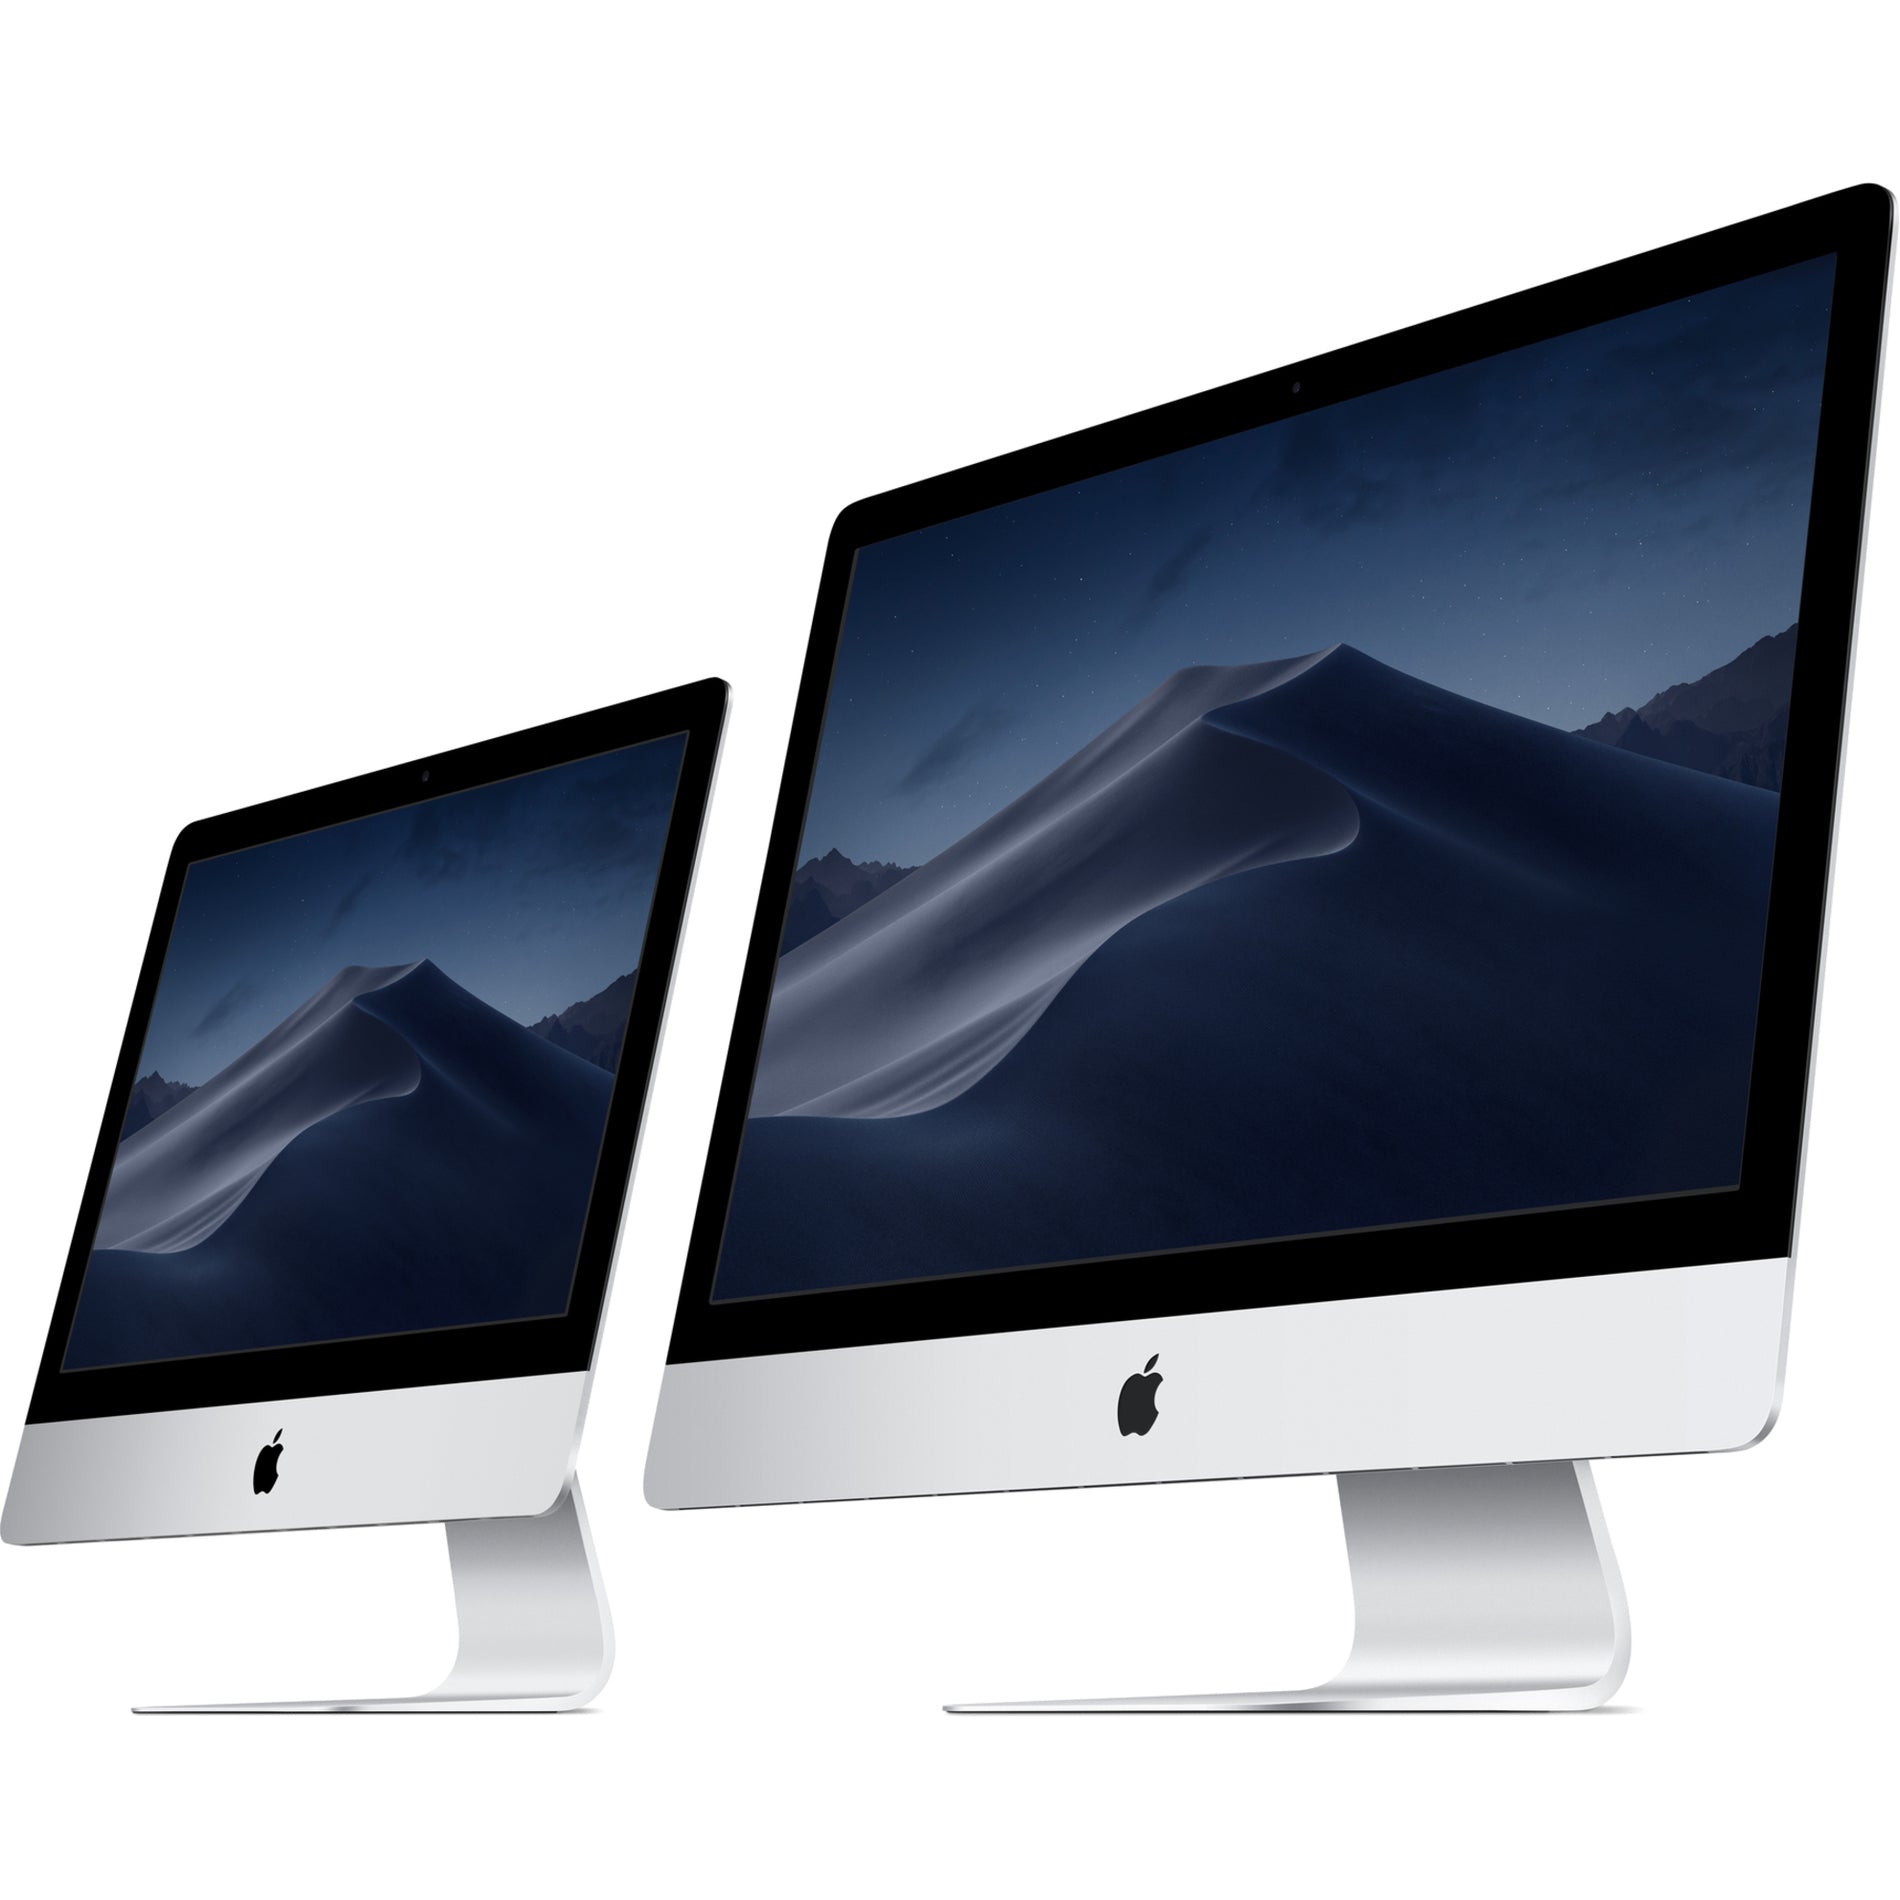 Apple MRQY2LL/A 27-inch iMac with Retina 5K Display, Core i5, 8GB RAM, 1TB Storage